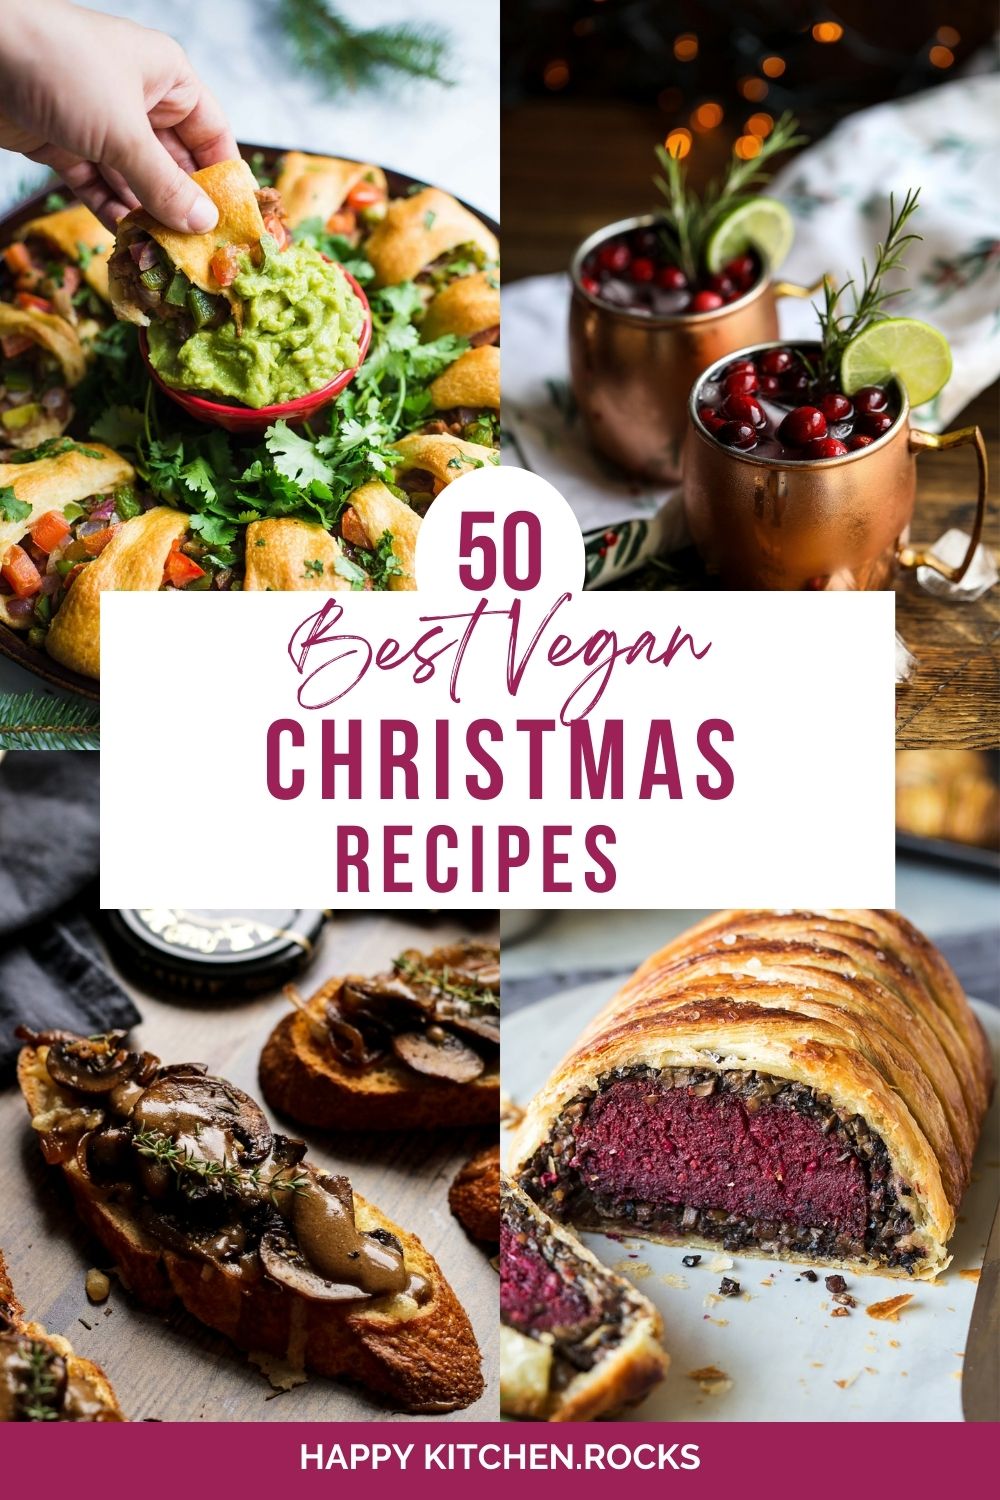 Vegan Christmas Recipes Roundup Collage.